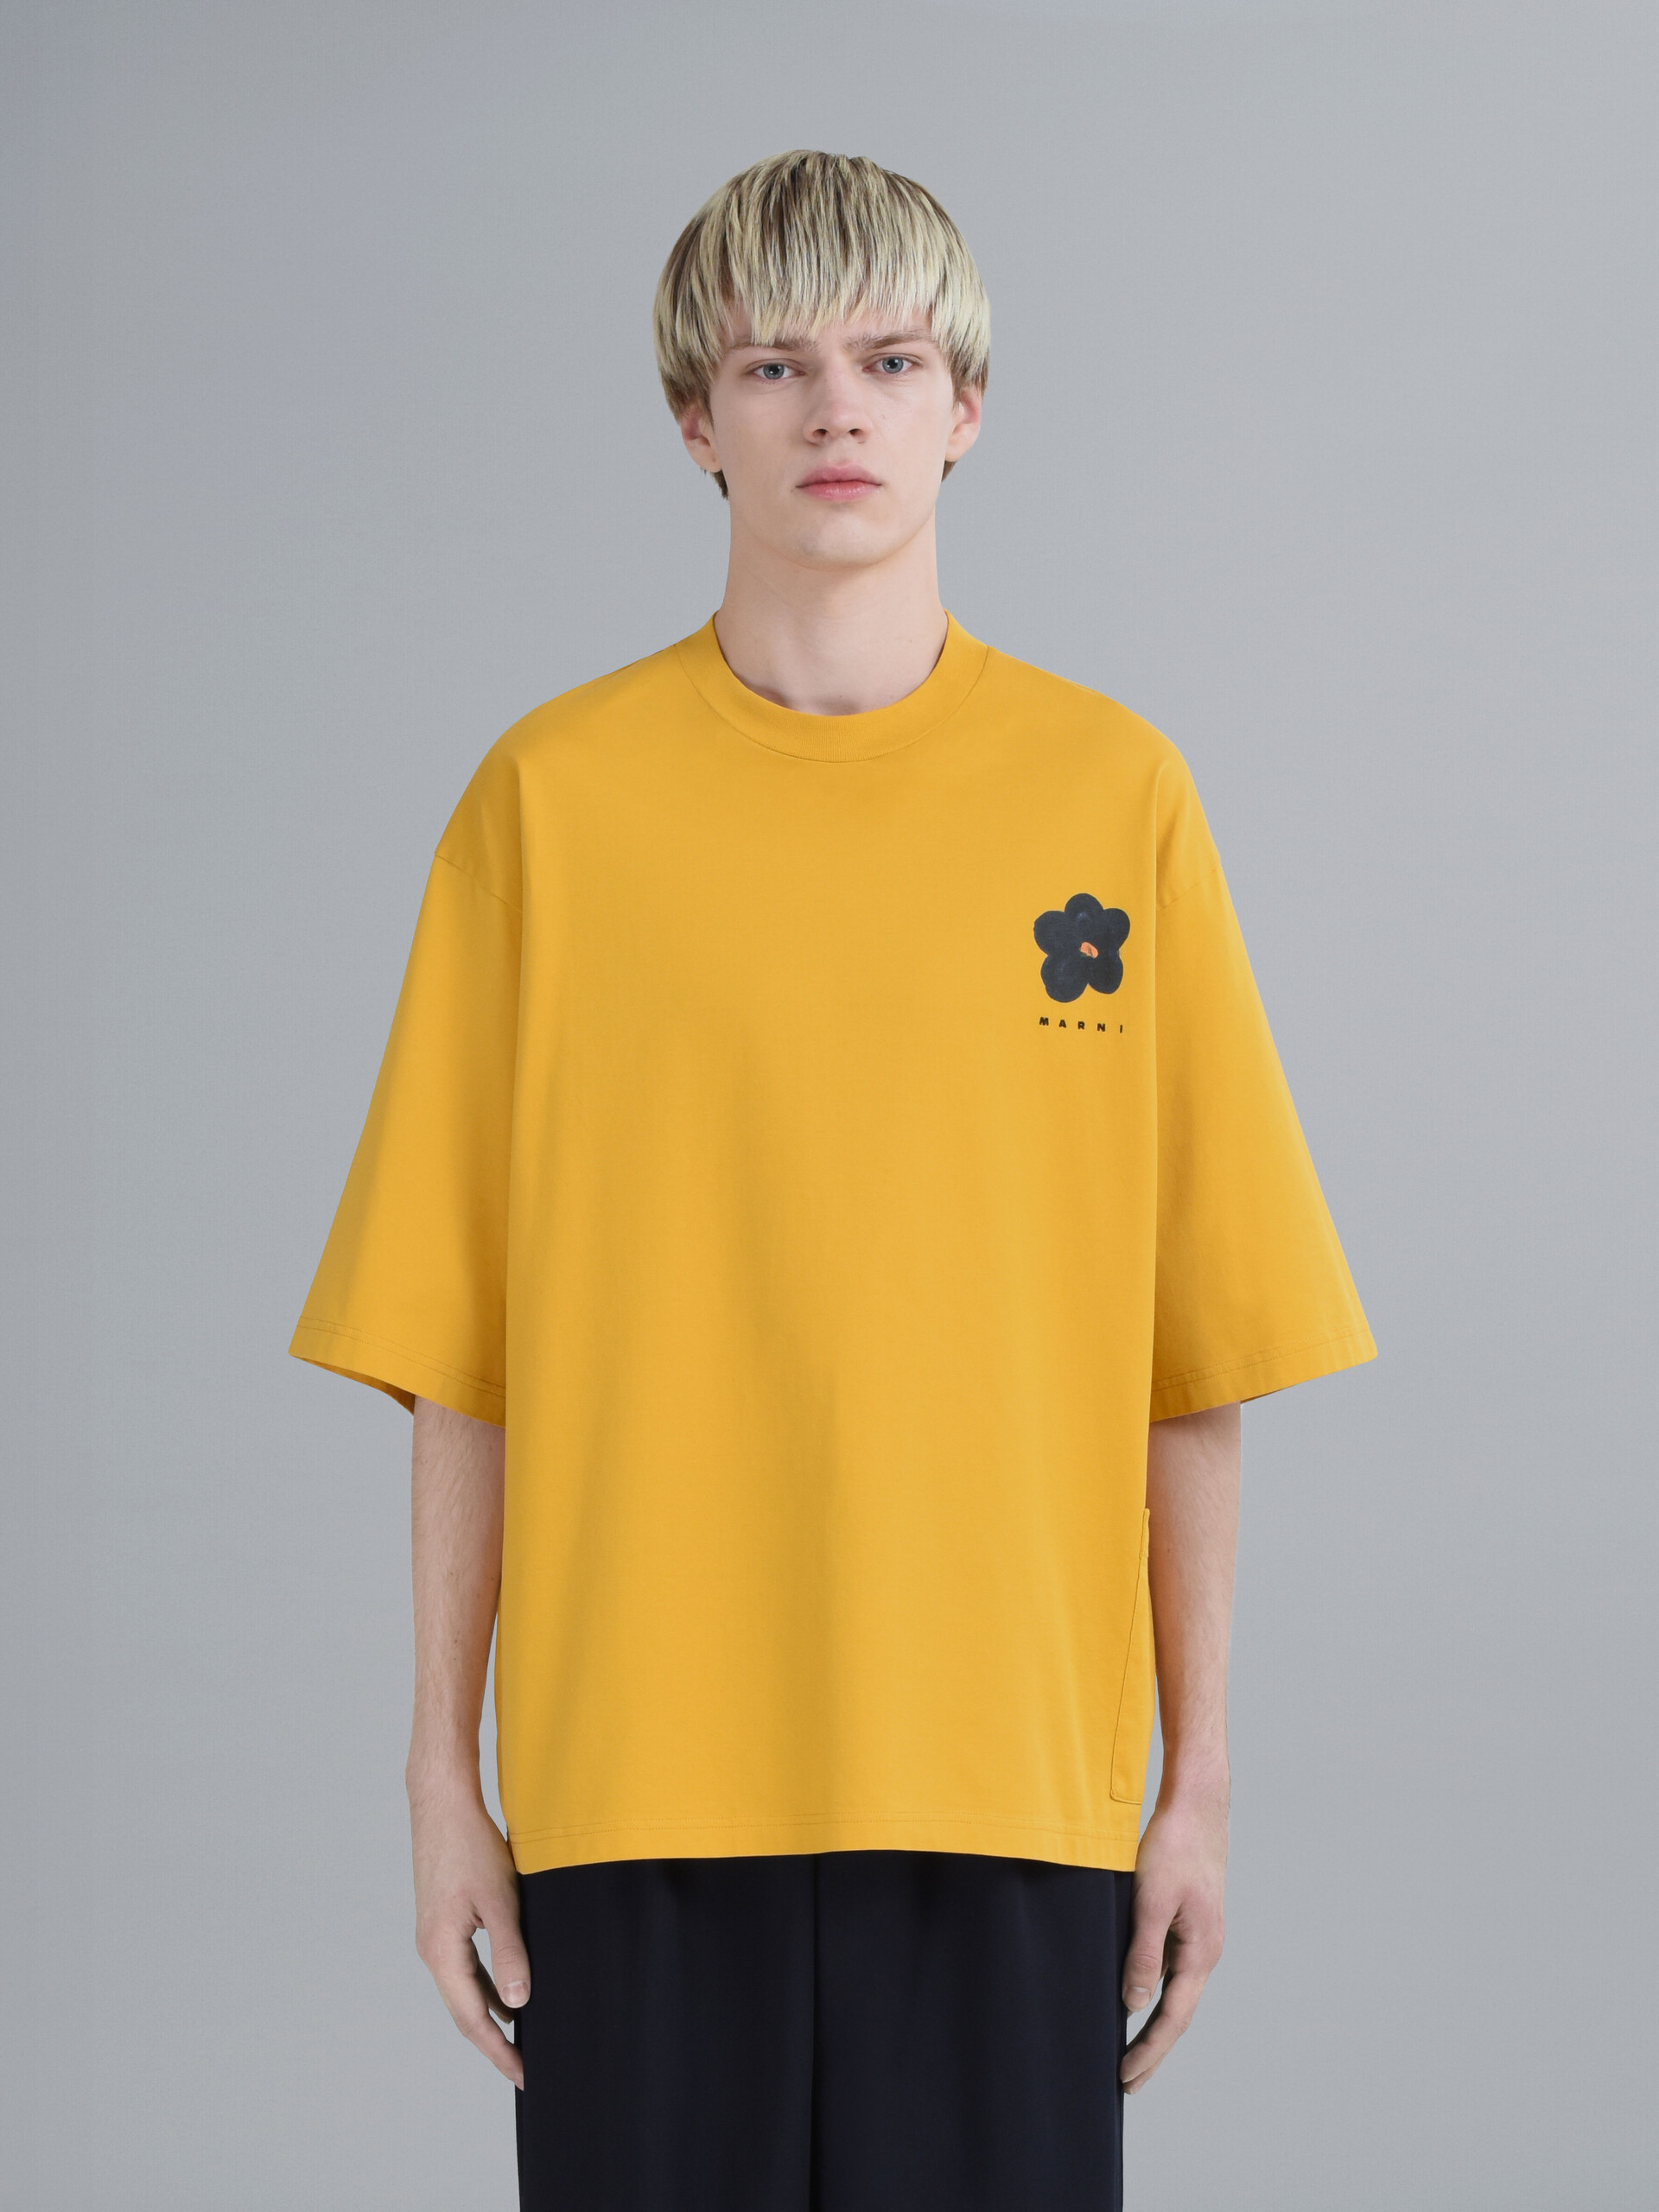 Black Daisy print yellow jersey crewneck T-shirt - T-shirts - Image 2